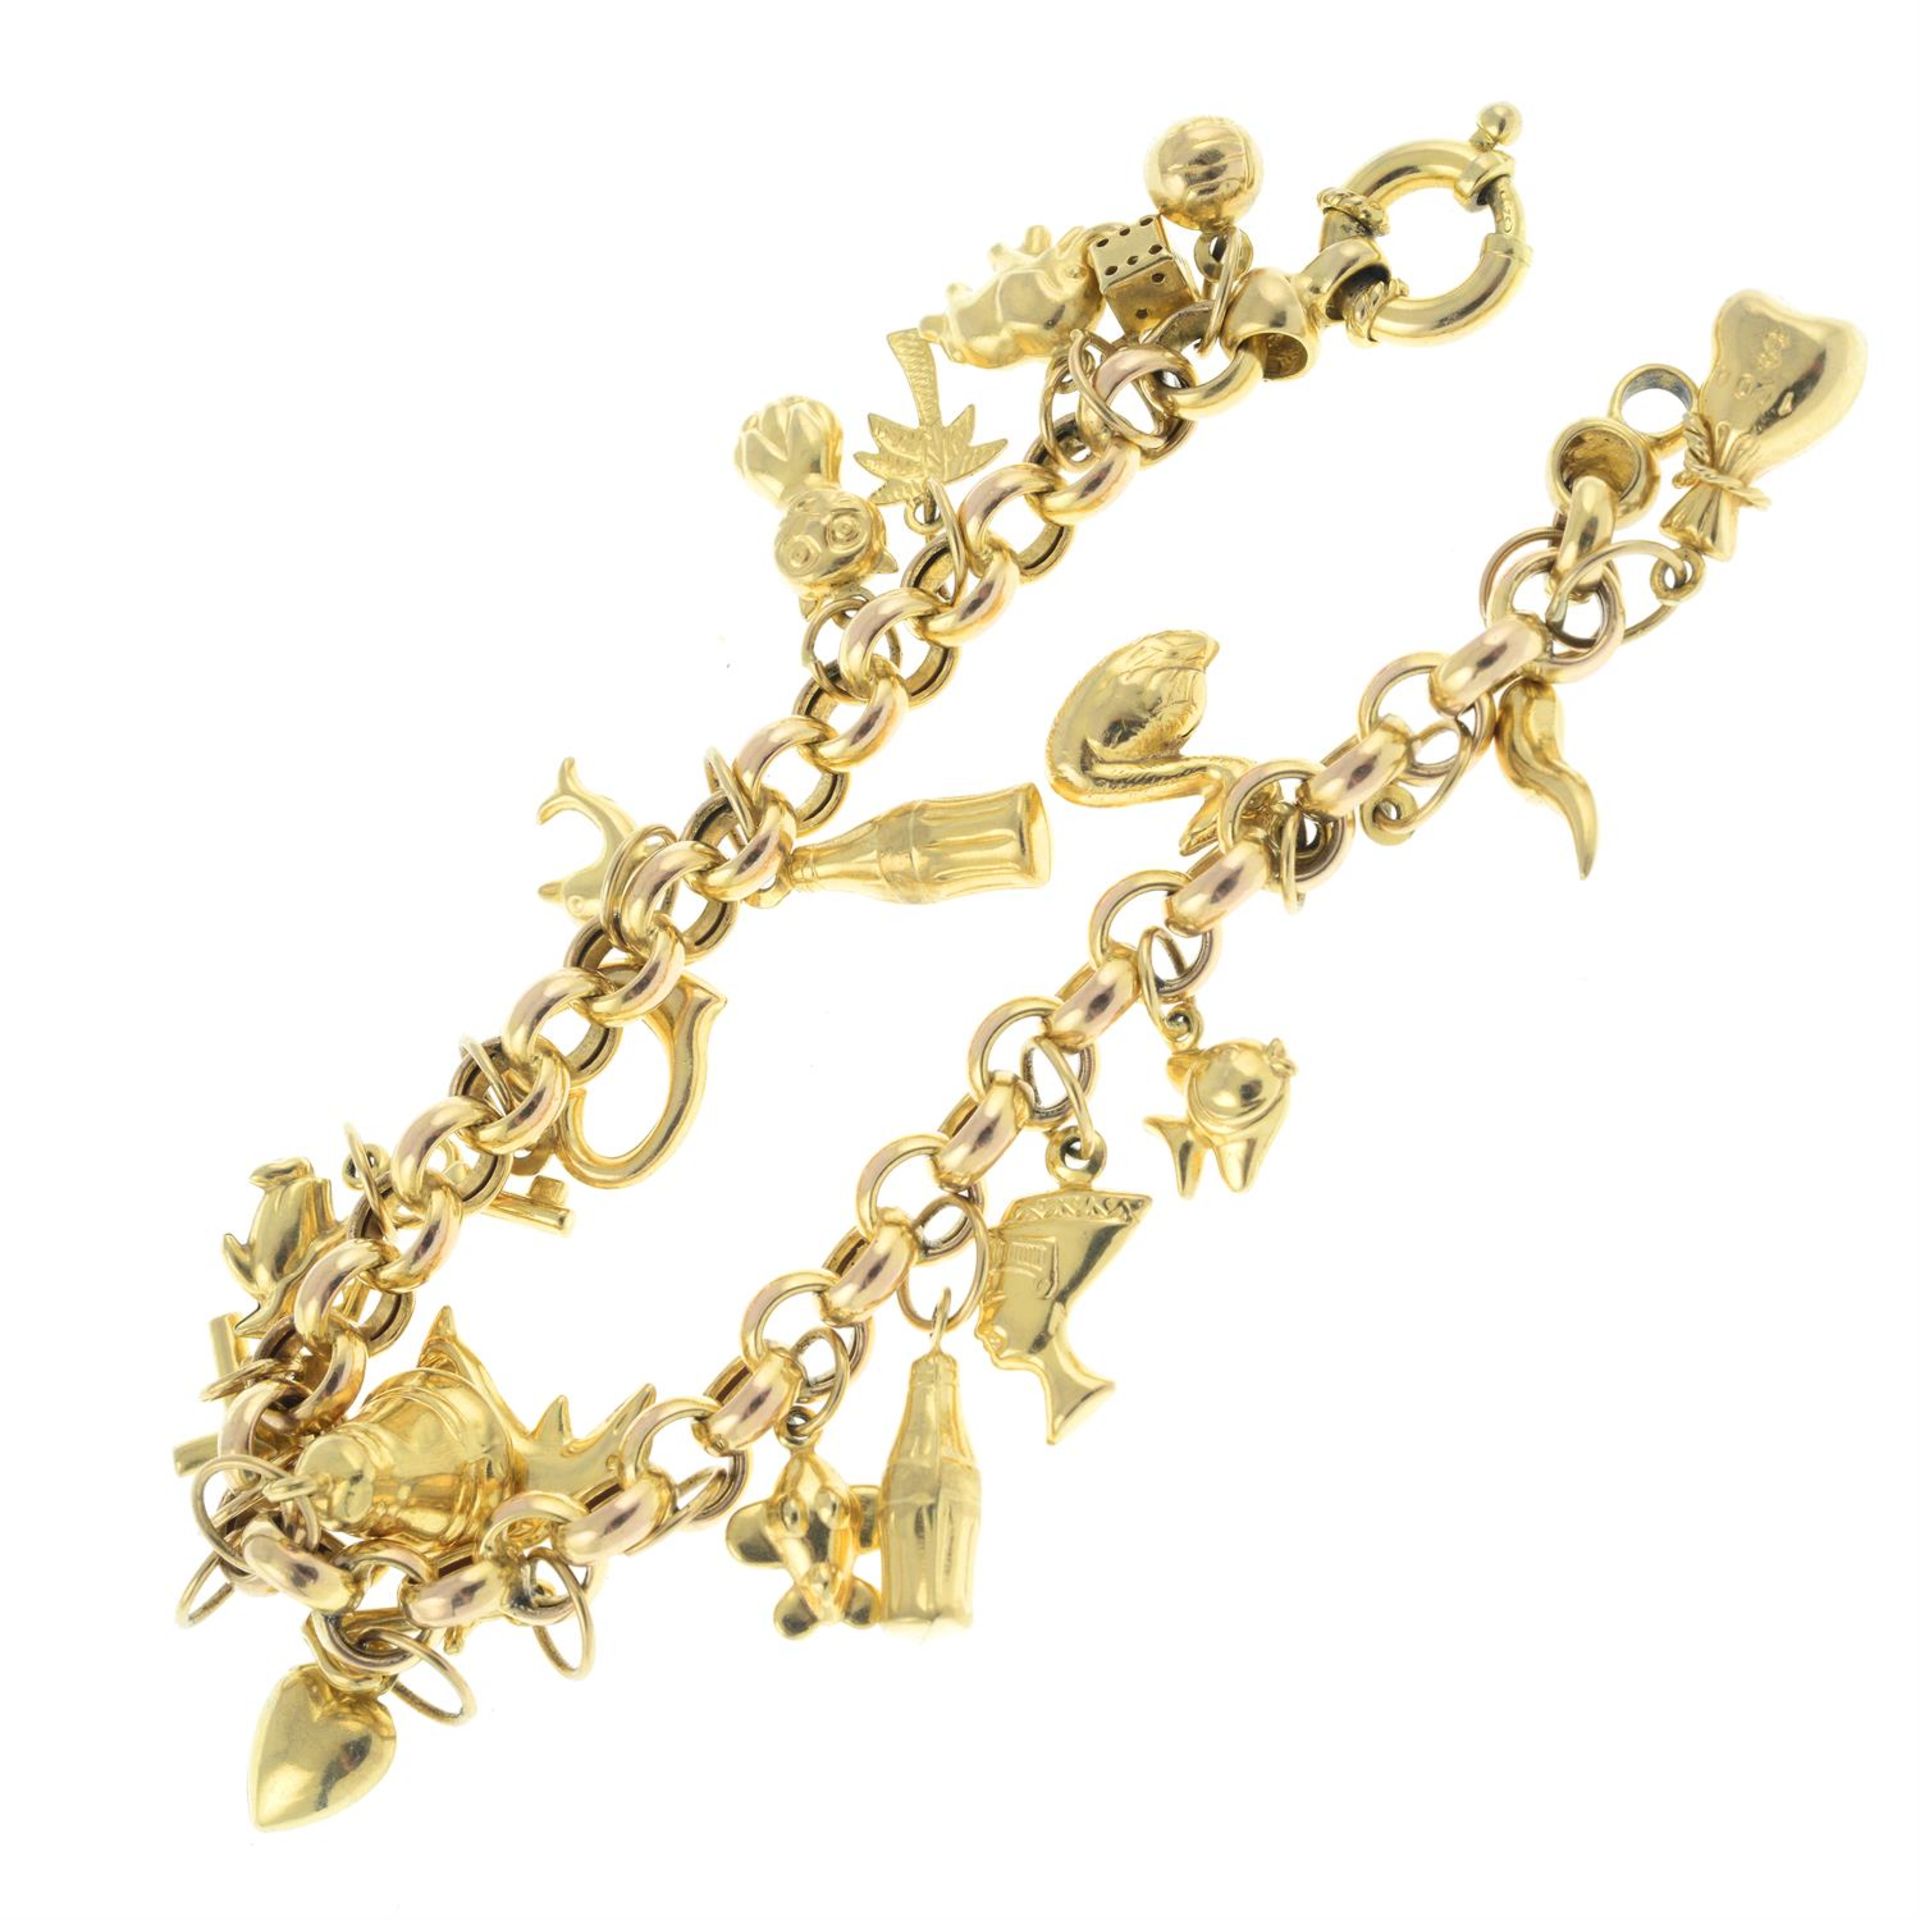 A 9ct gold charm bracelet, suspending twenty-three charms. - Image 2 of 2